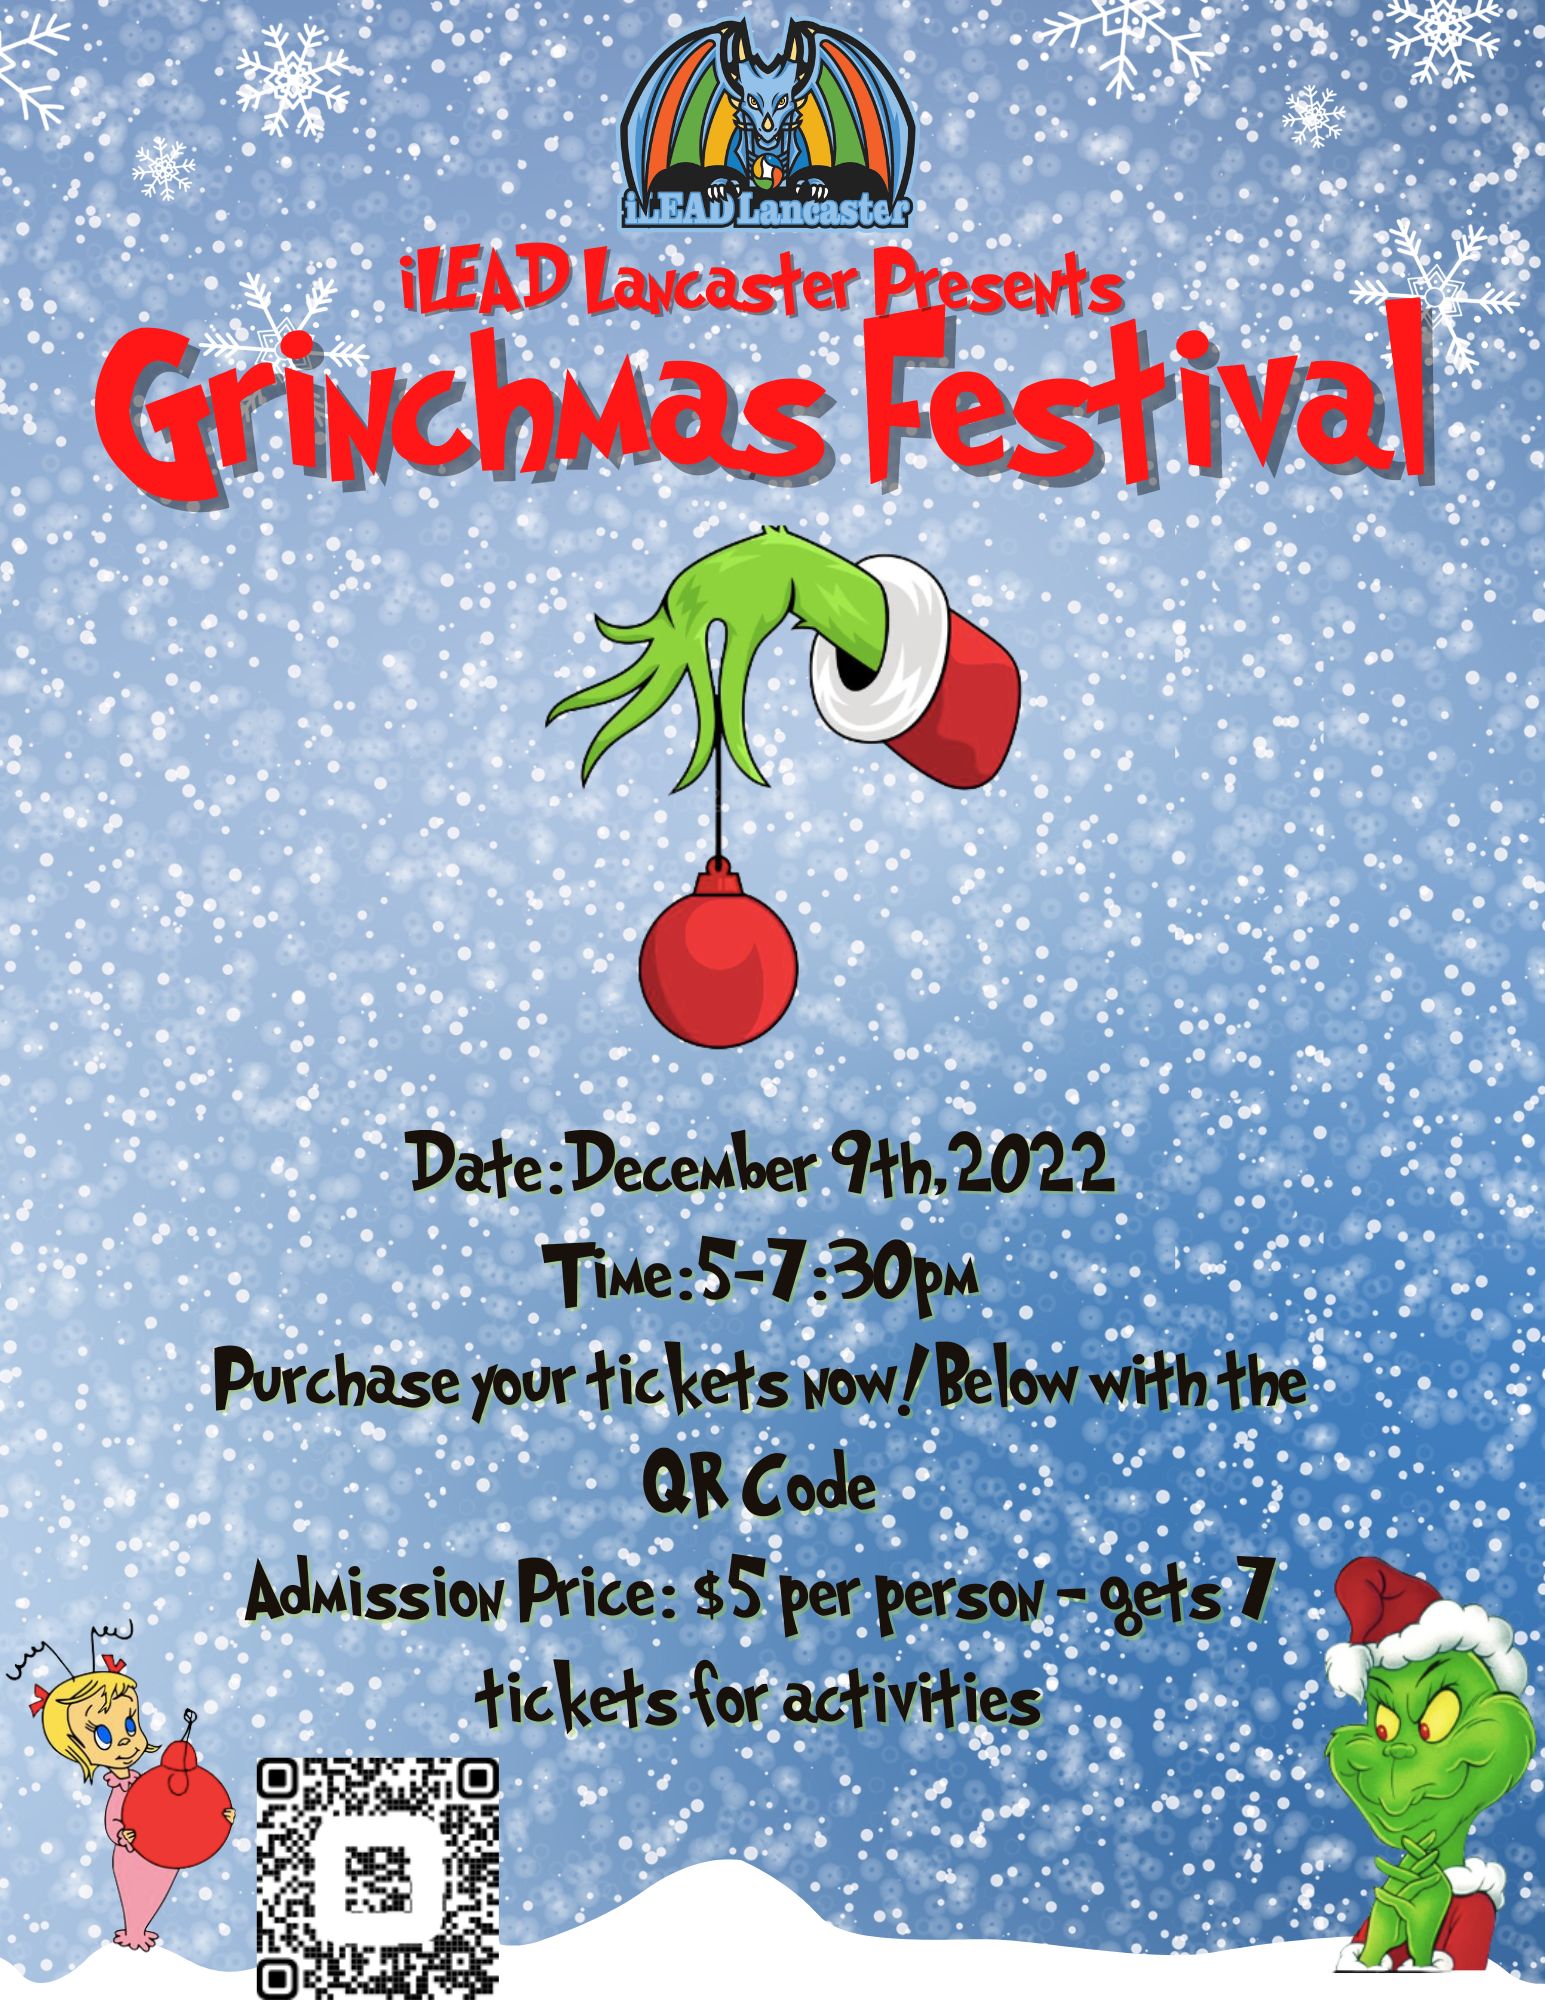 iLEAD Lancaster presents Grinchmas Festival! iLEAD Lancaster